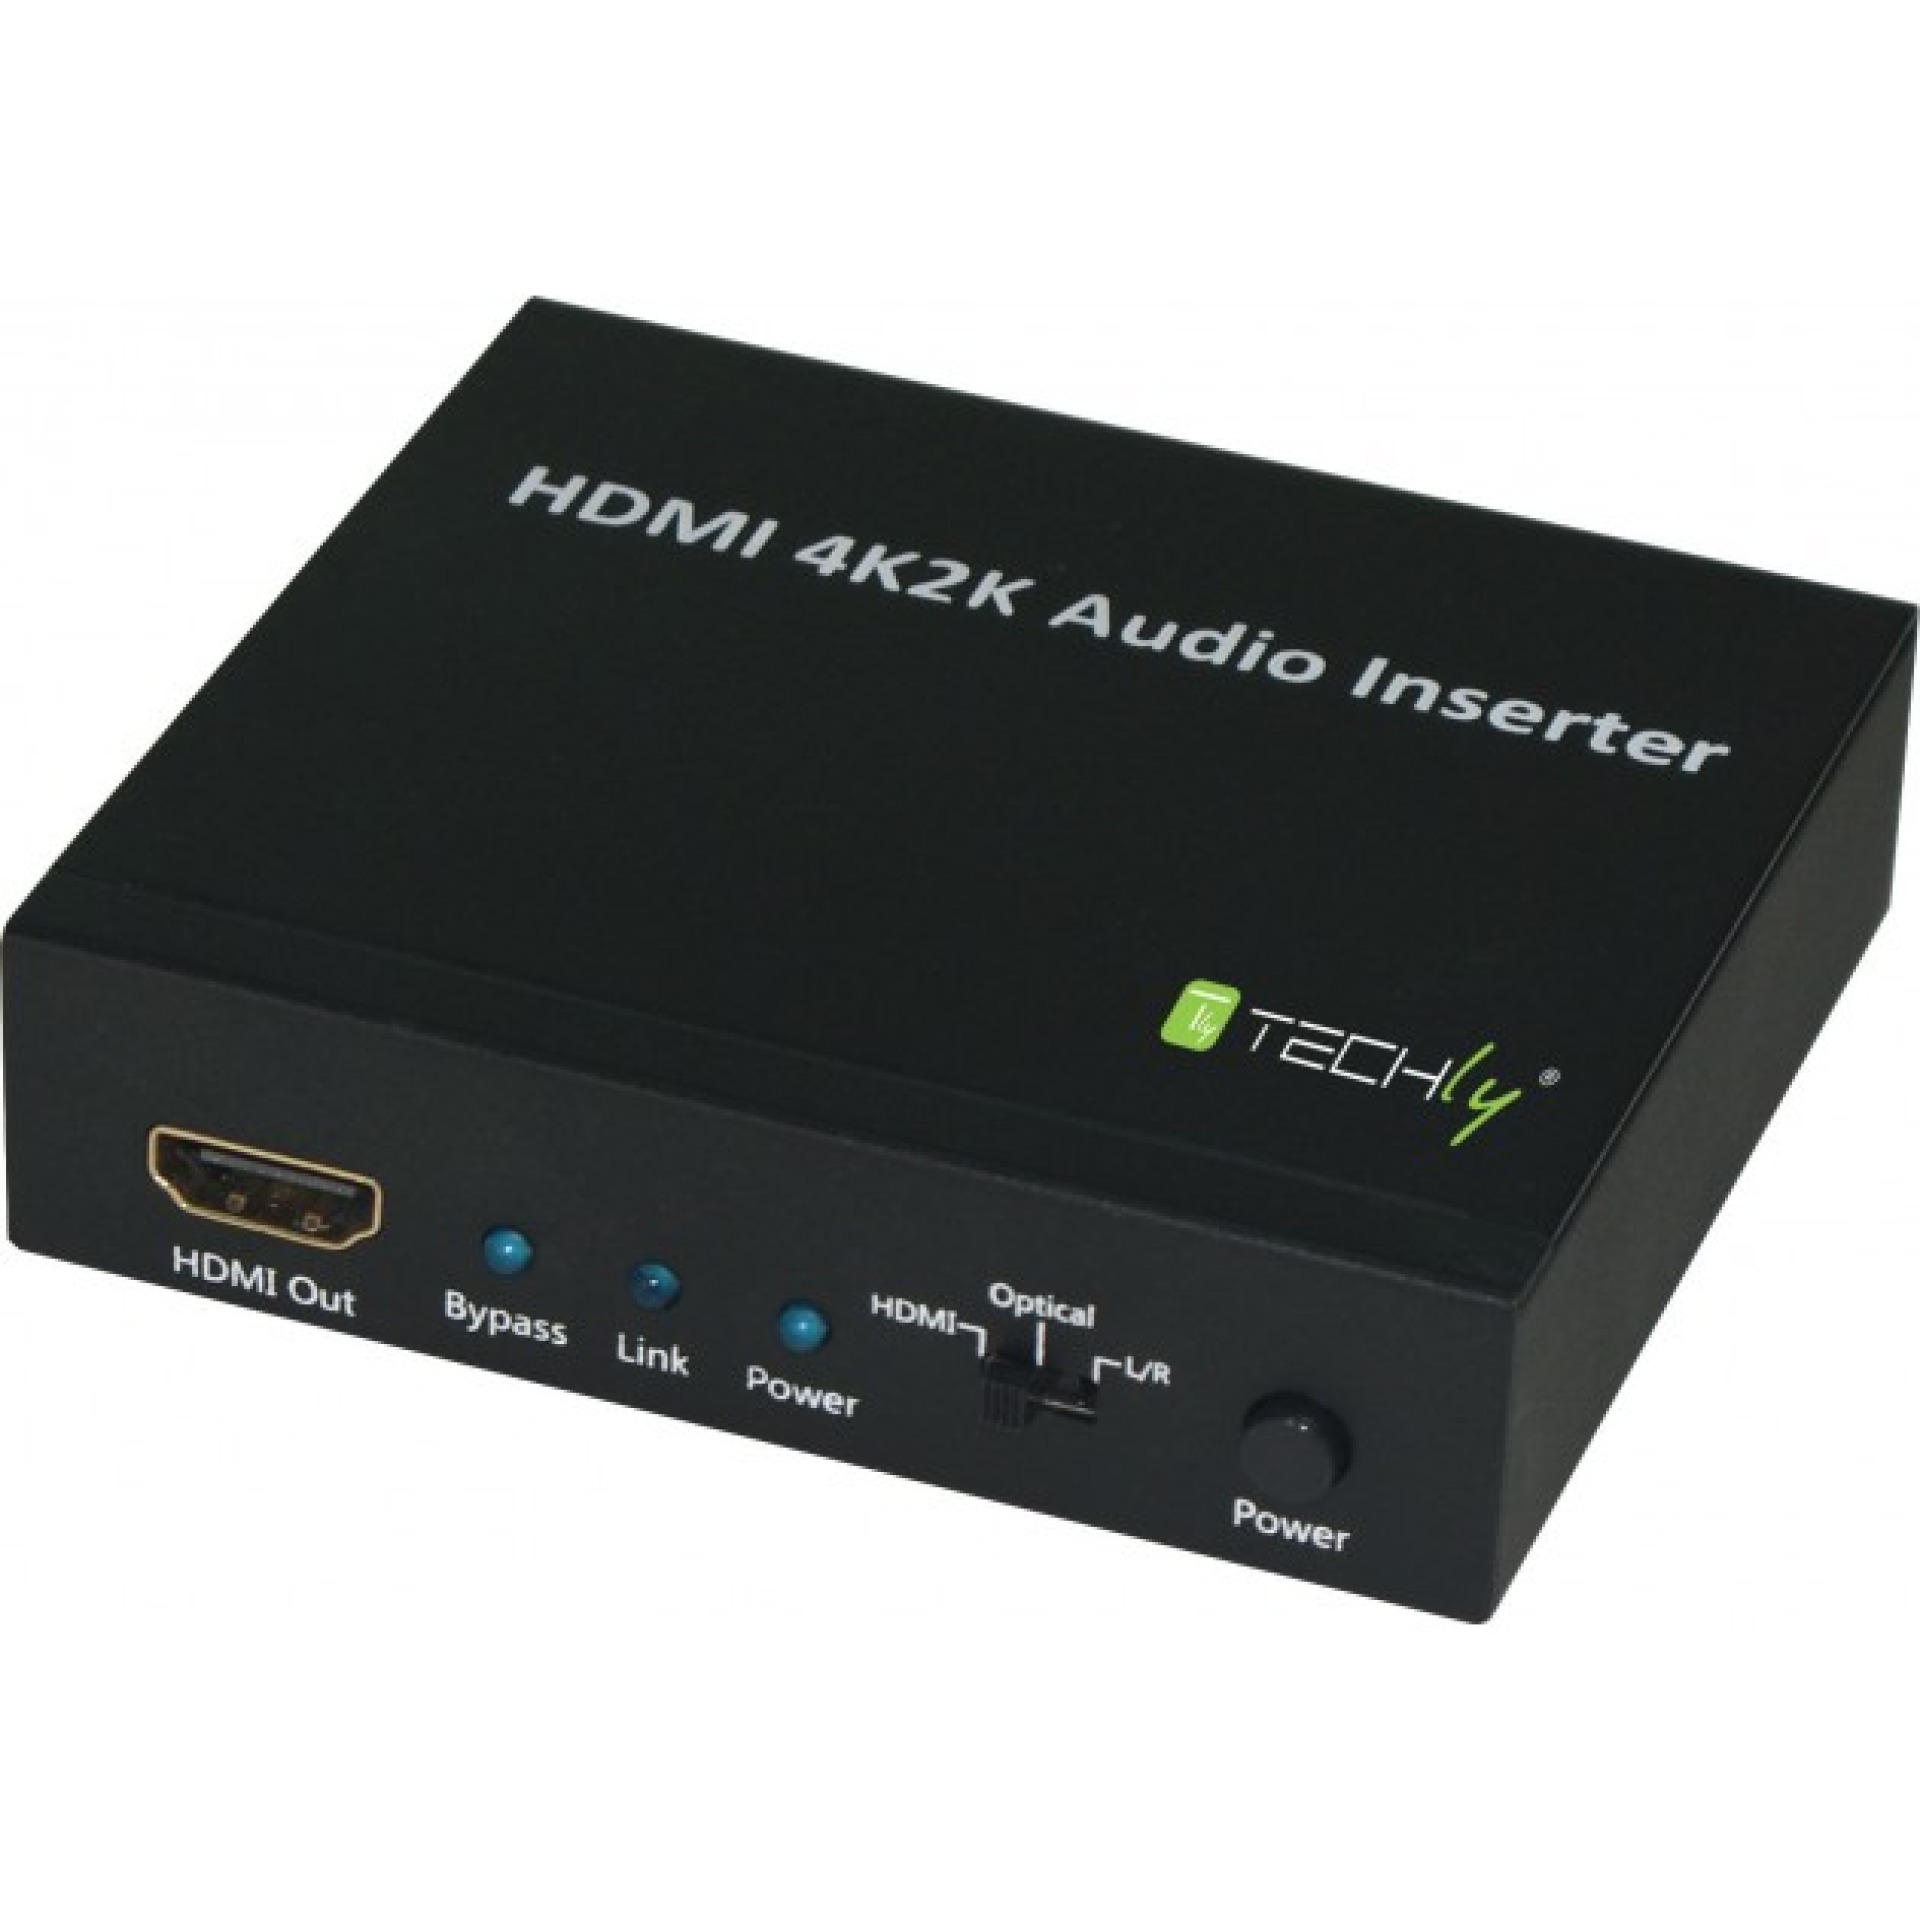 HDMI/DVI Audio Inserter Converter